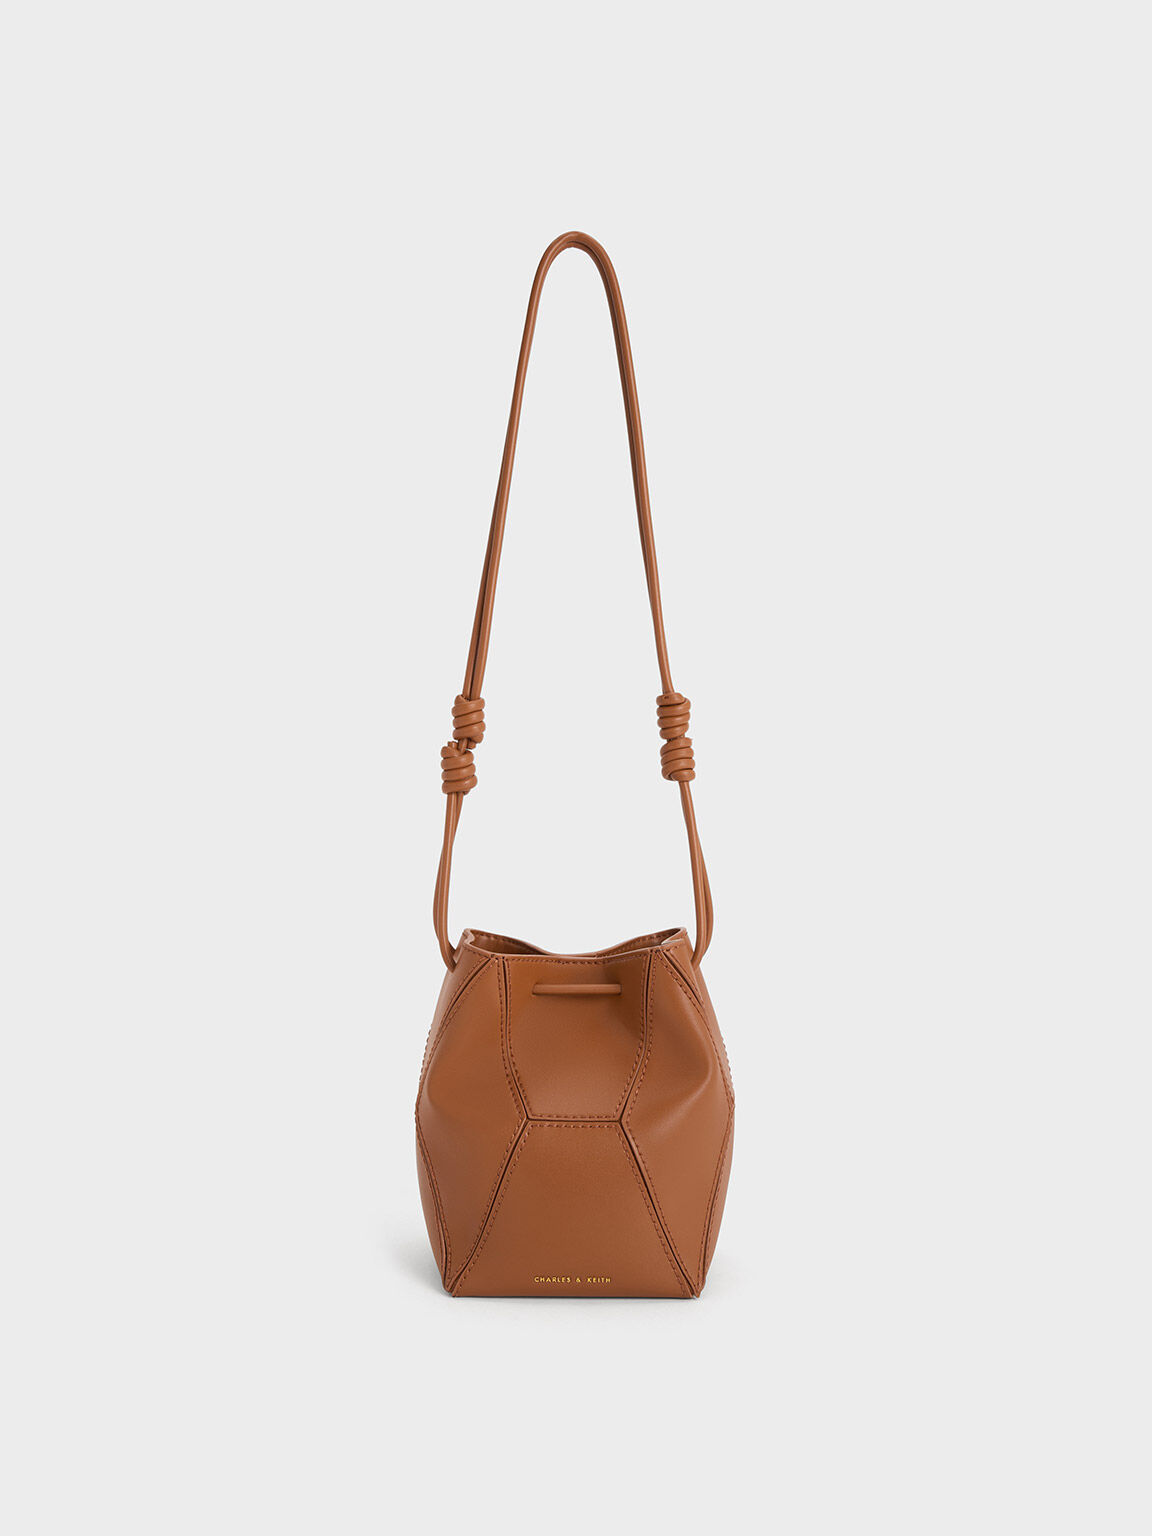 2pcs/set Fashionable Solid Color Geometric Pattern Handbags Small